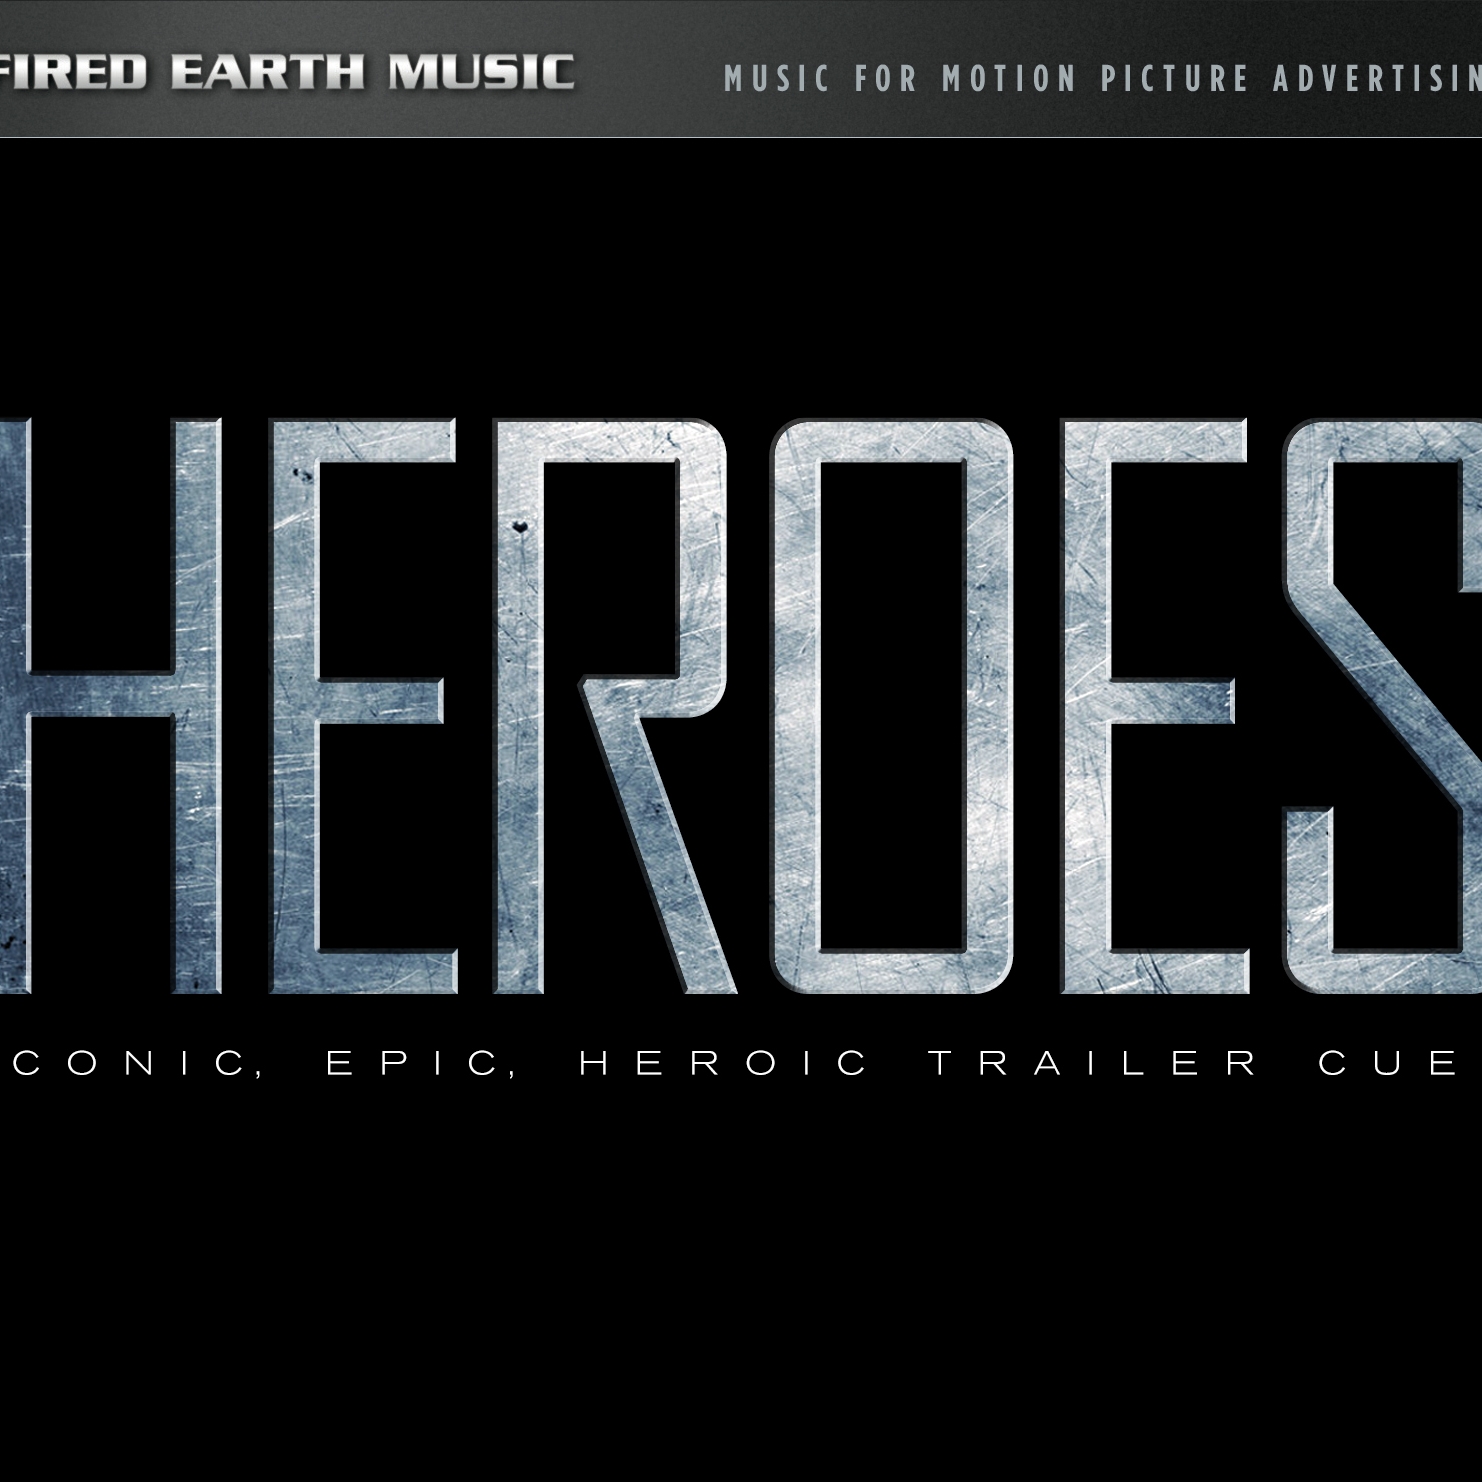 Fired Earth Music: Heroes